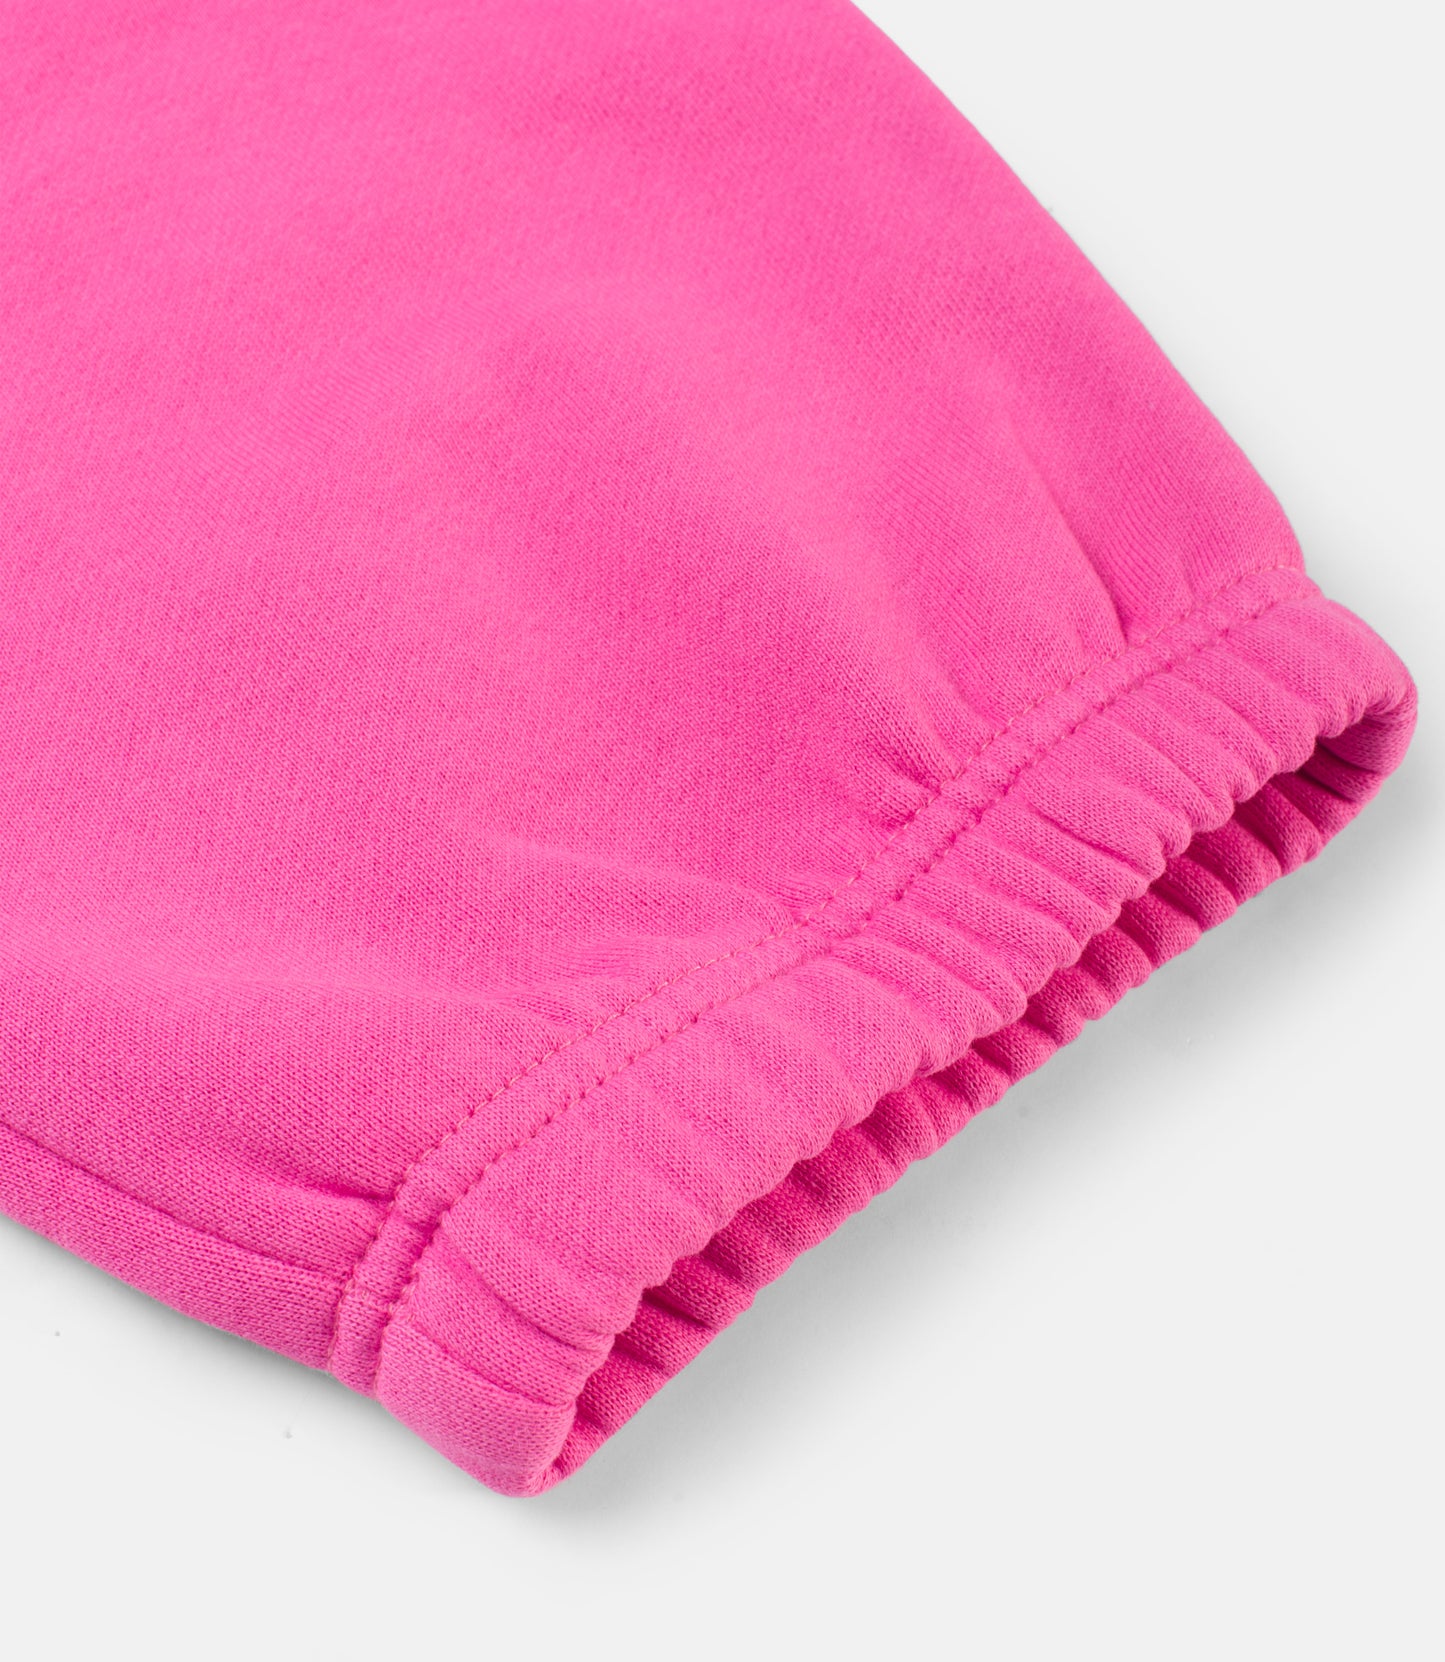 10Deep - Sound & Fury Men's Sweatpants, Pink - The Giant Peach